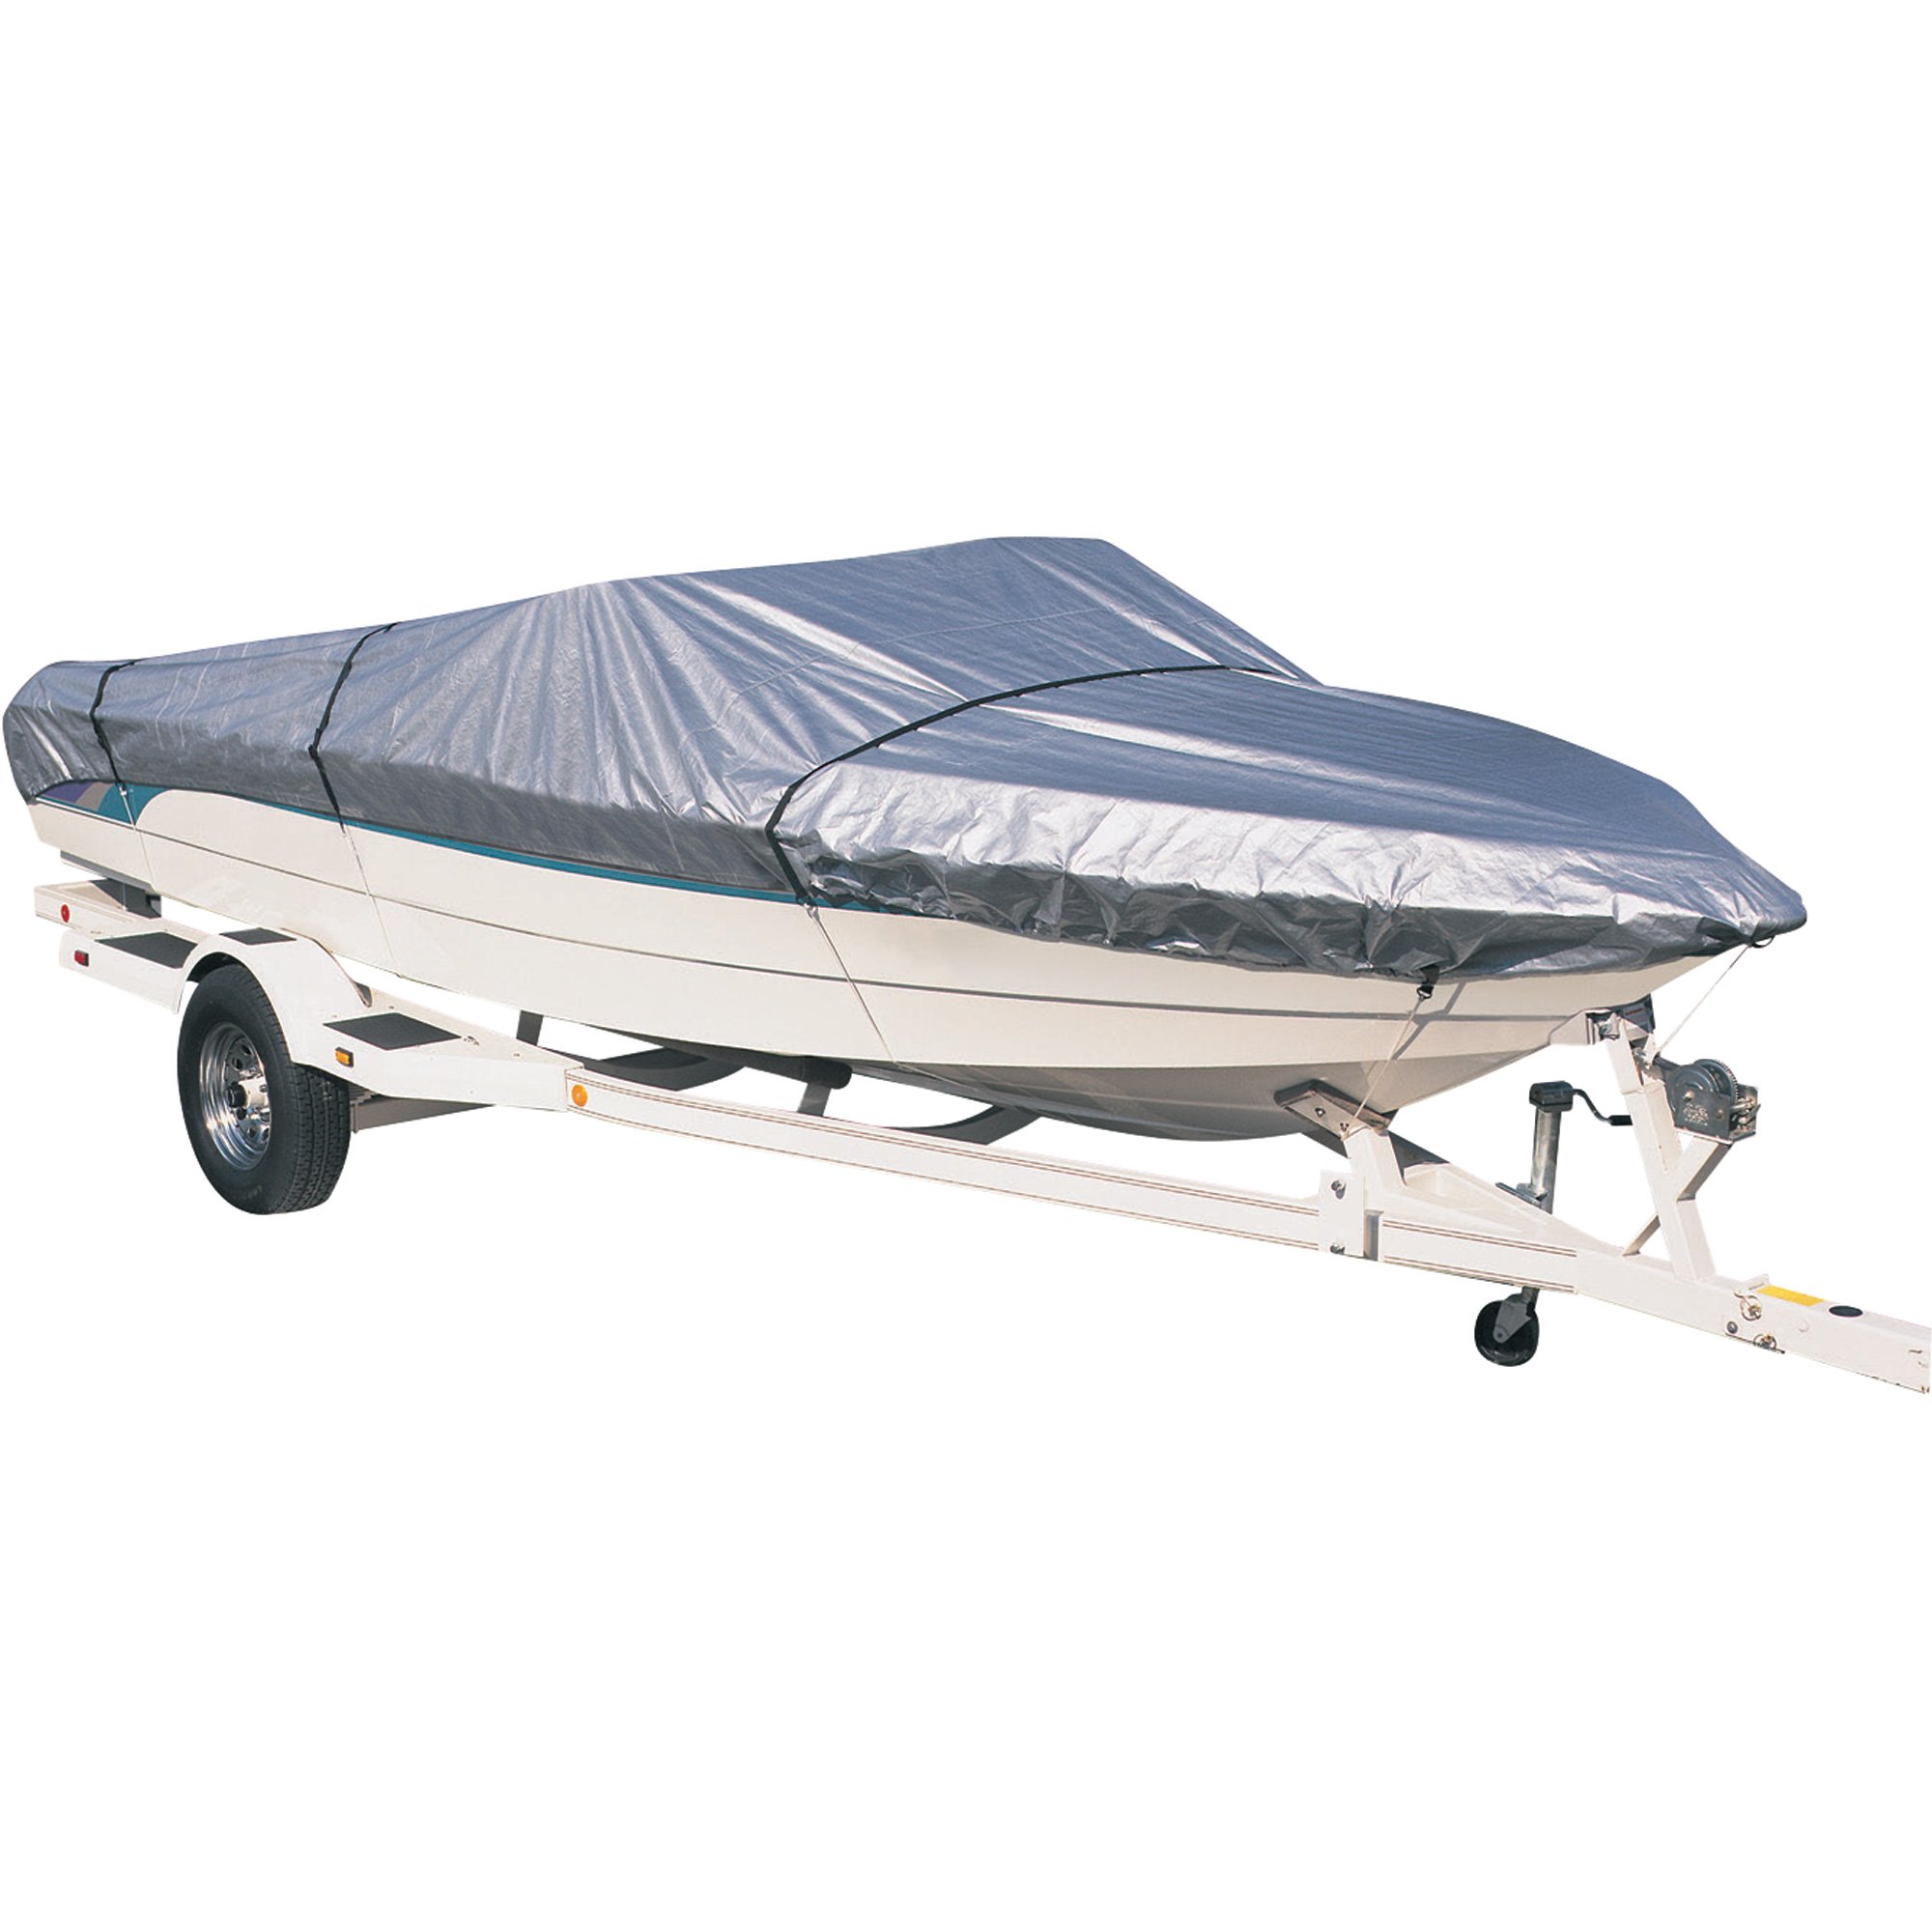 Waterproof PE Tarp Boat Cover for 14-16ft. V-hull Fishing Boats